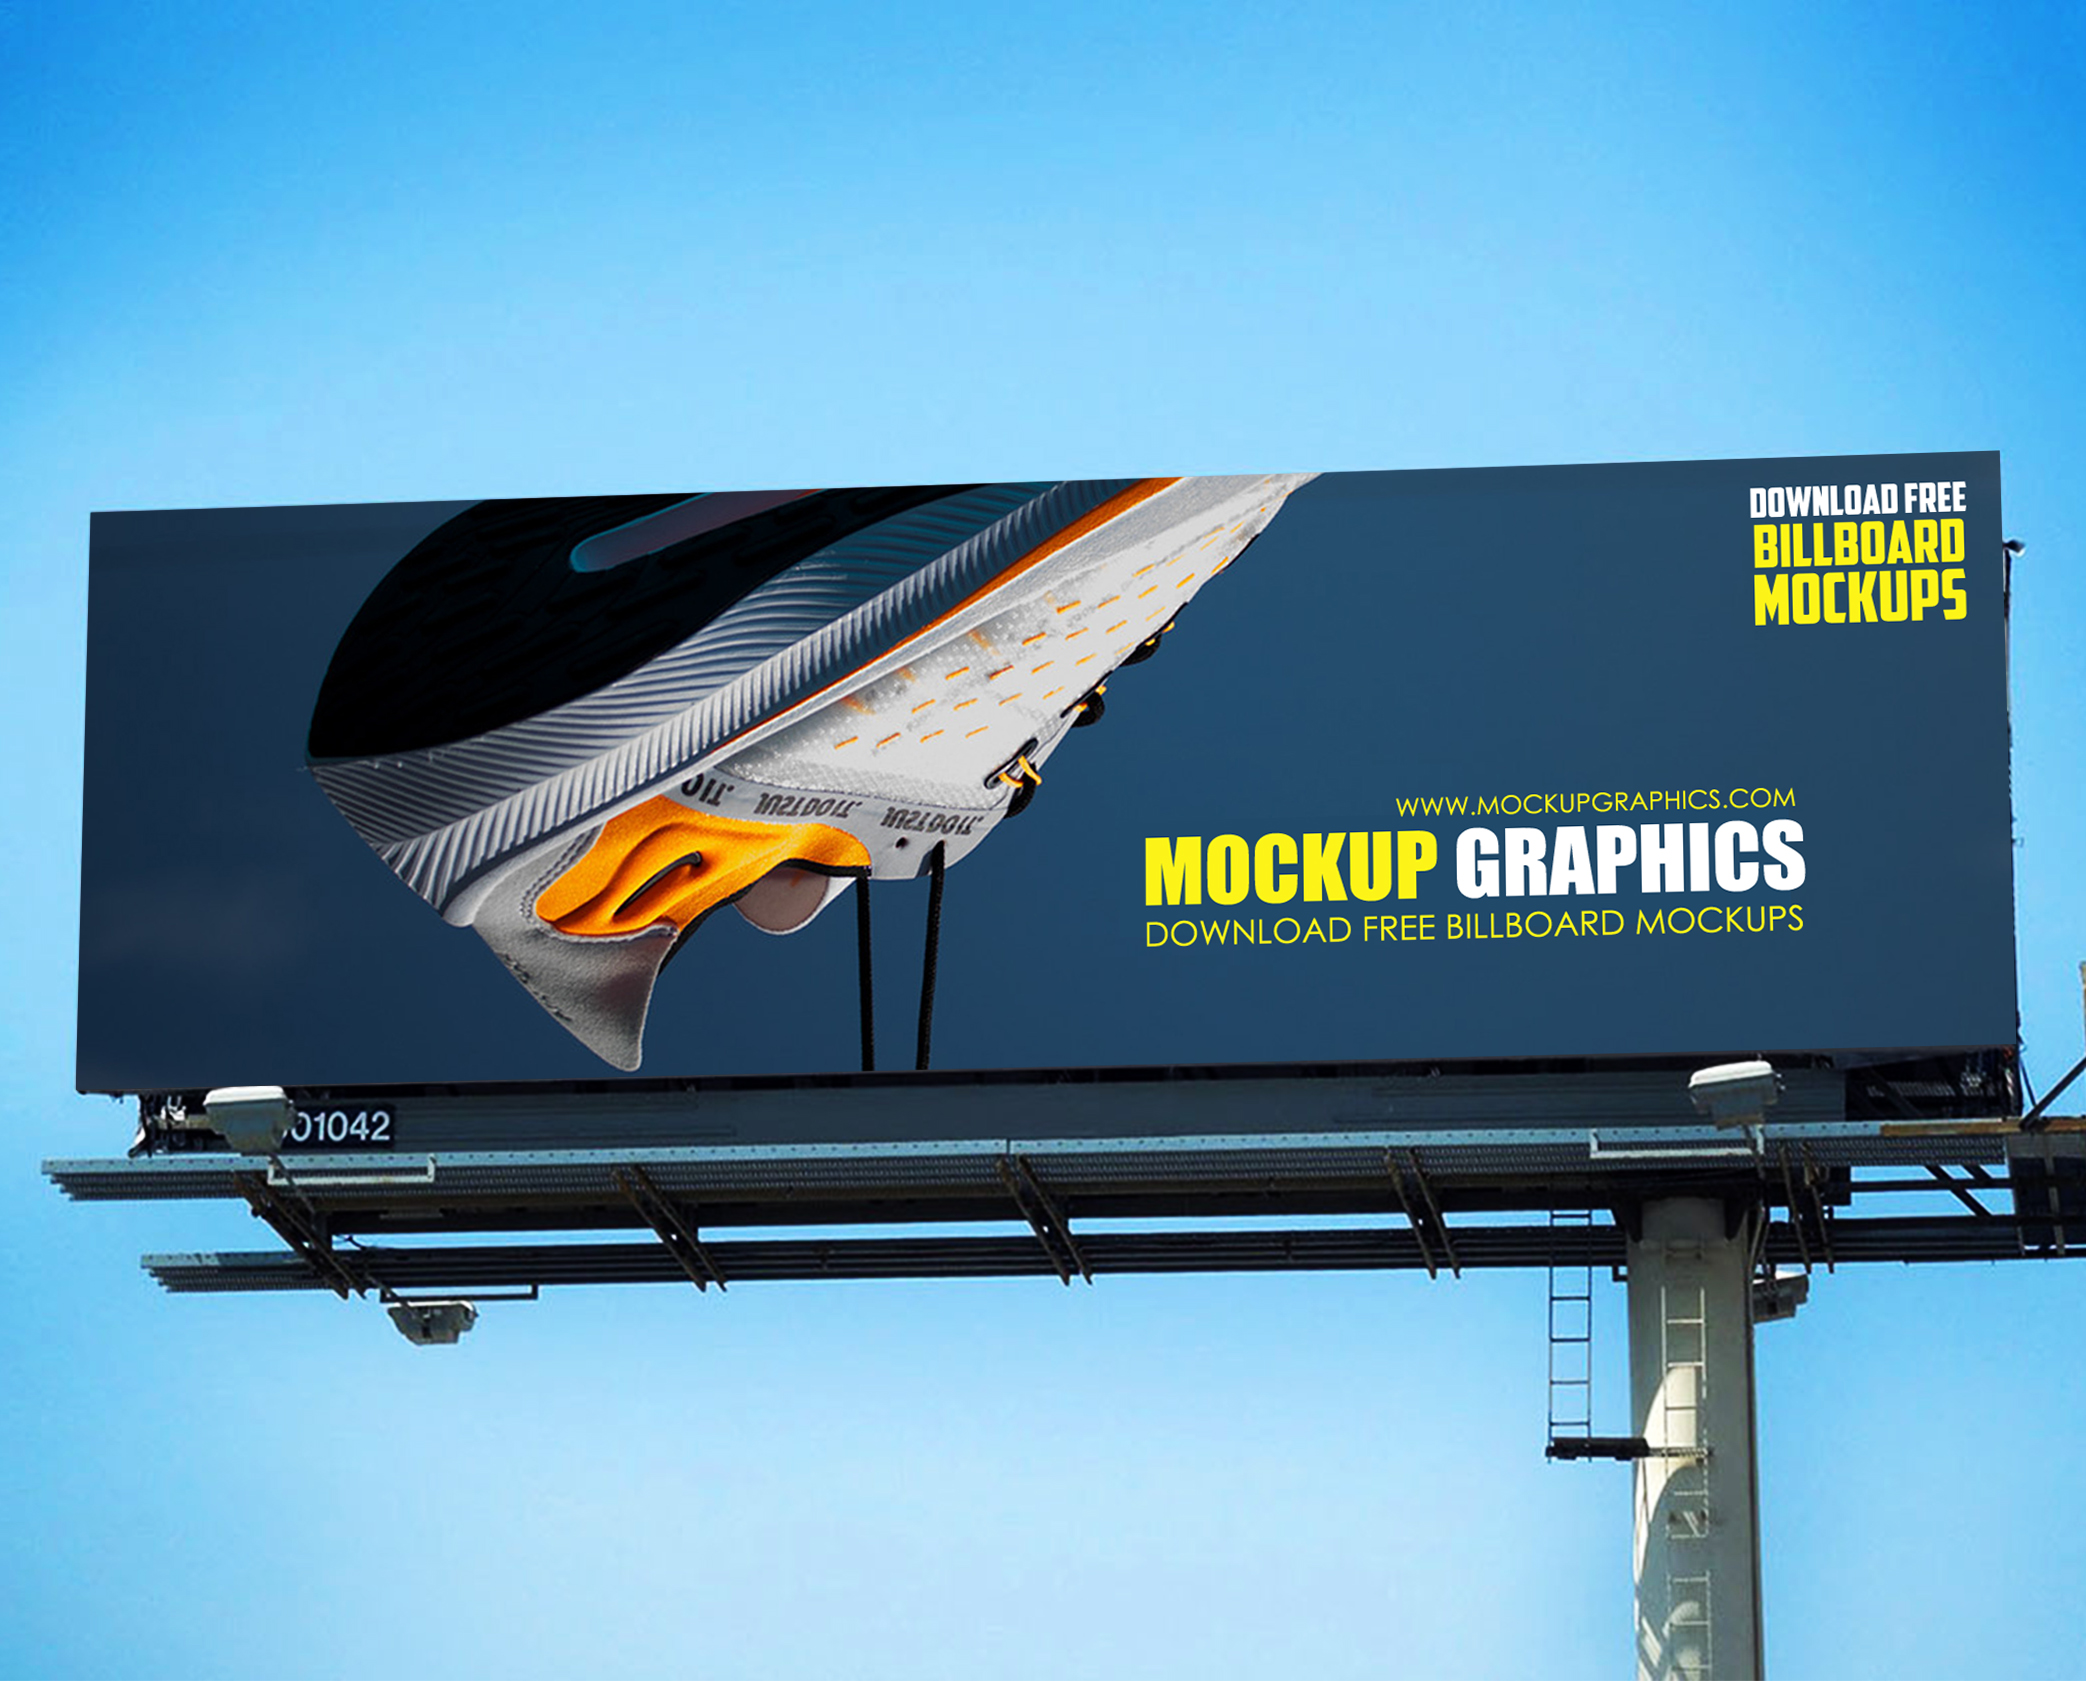 free billboard mockup - www.mockupgraphics.com